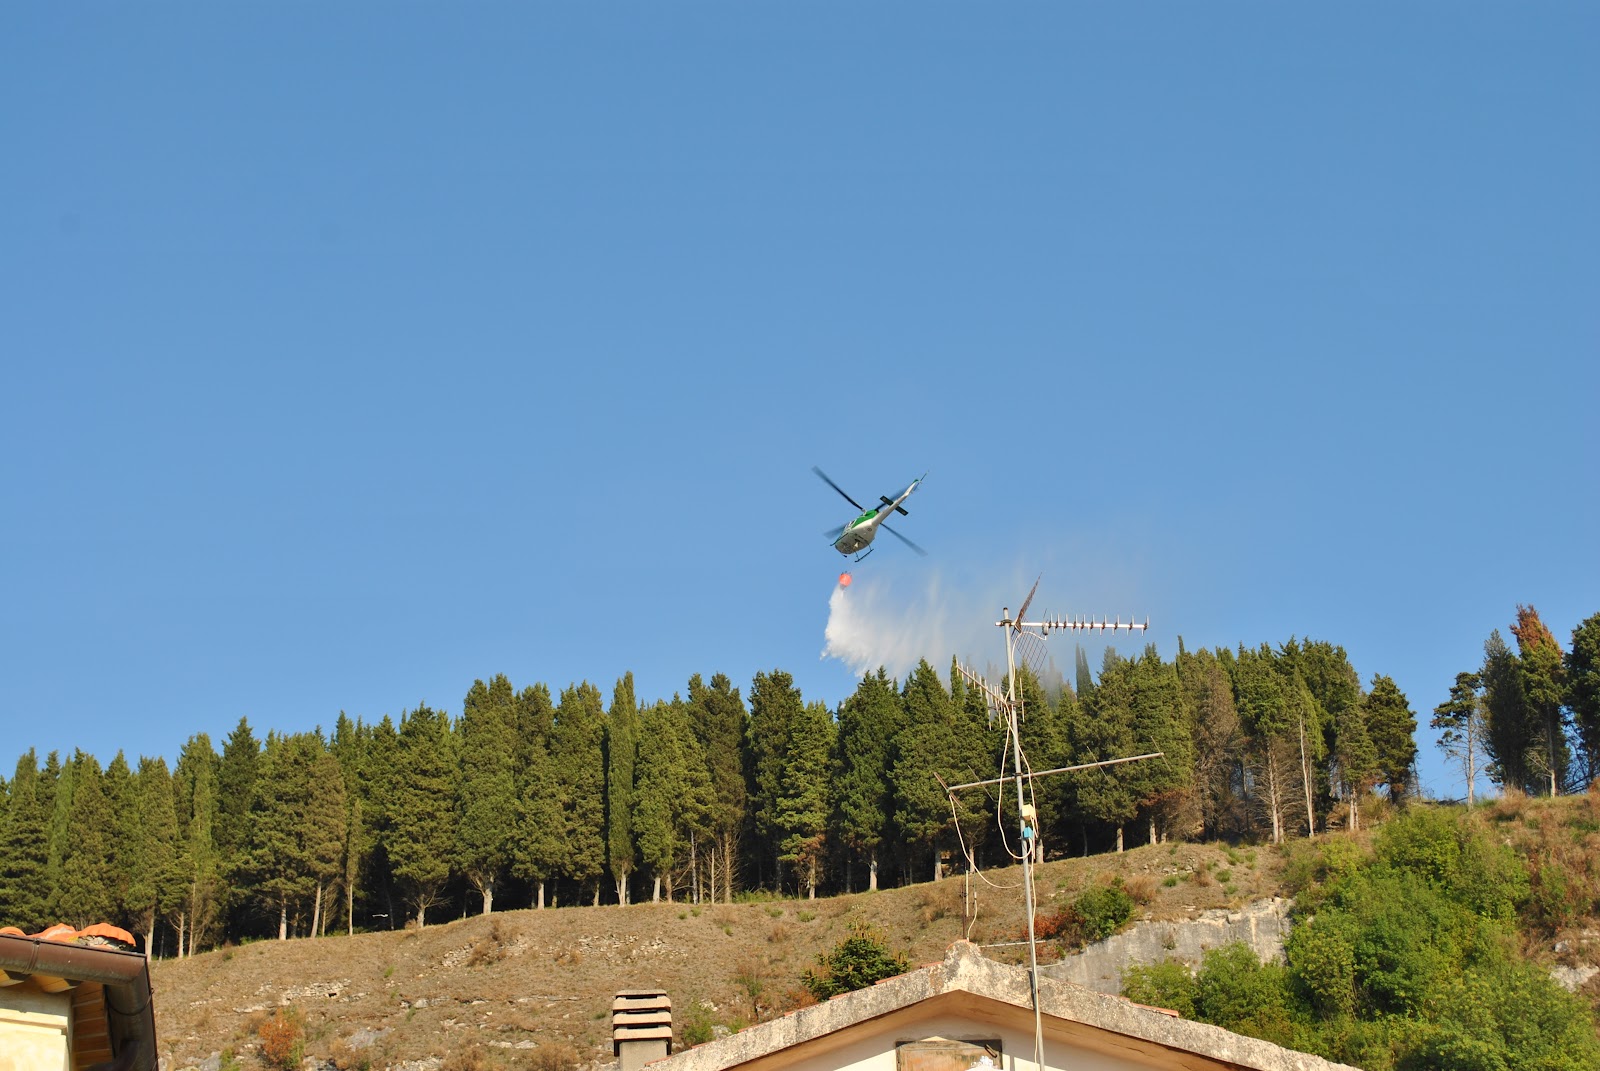 Thumbnail image for /public/upload/2012/8/634812350130301095_Elicottero Afor spegne incendio sul castello.JPG